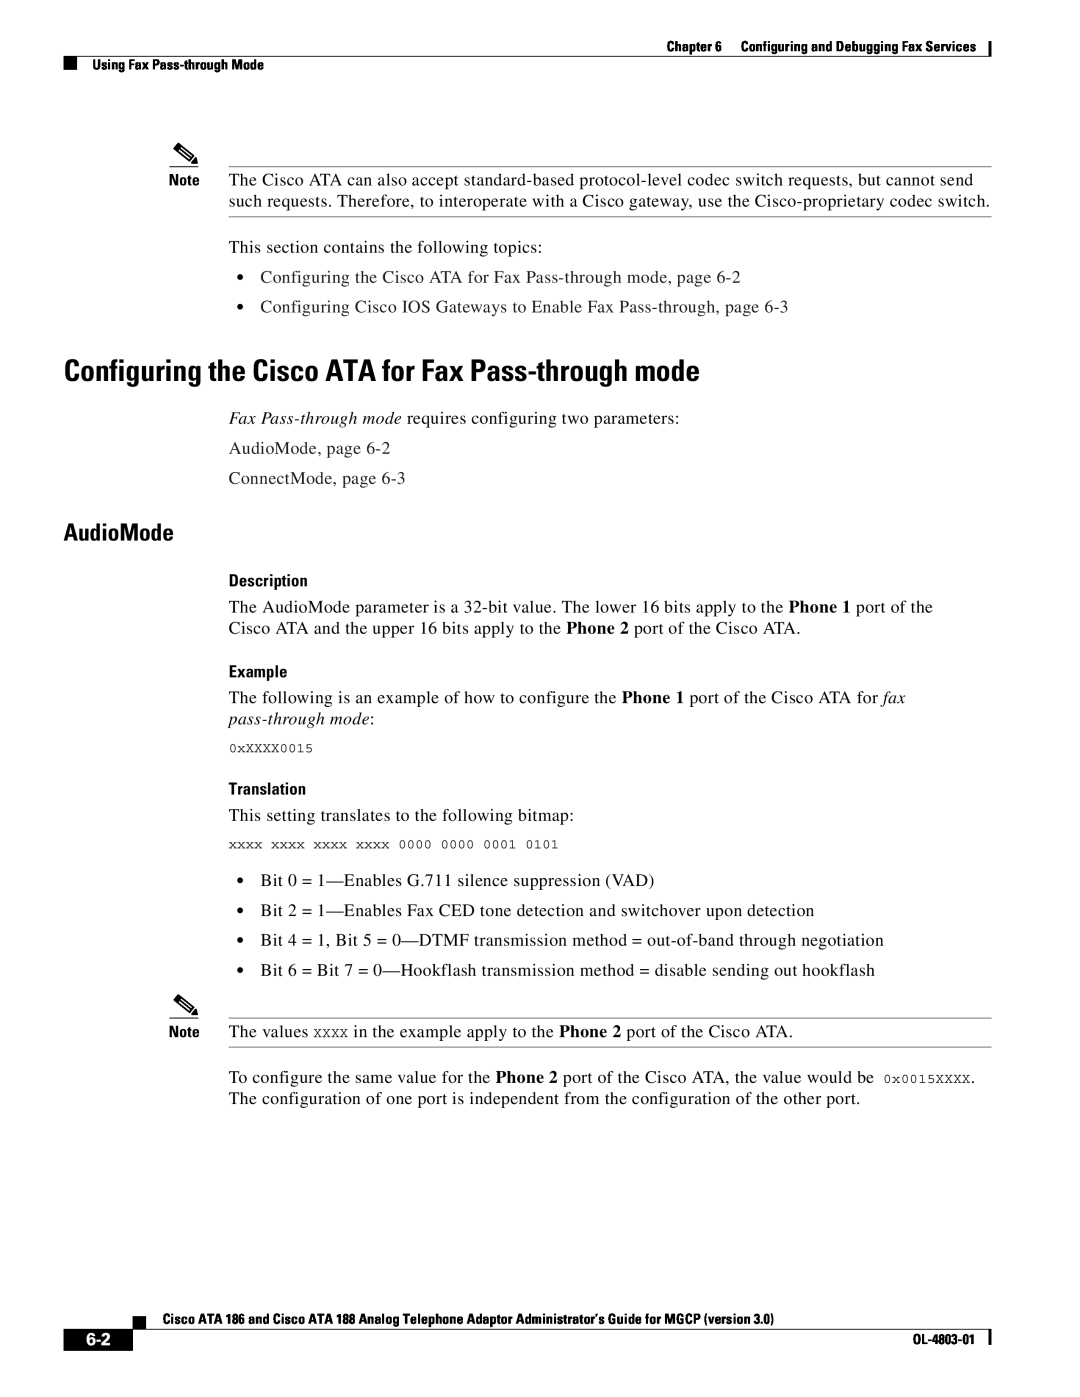 Cisco Systems ATA 186 Configuring the Cisco ATA for Fax Pass-through mode, AudioMode, page ConnectMode, page, Example 